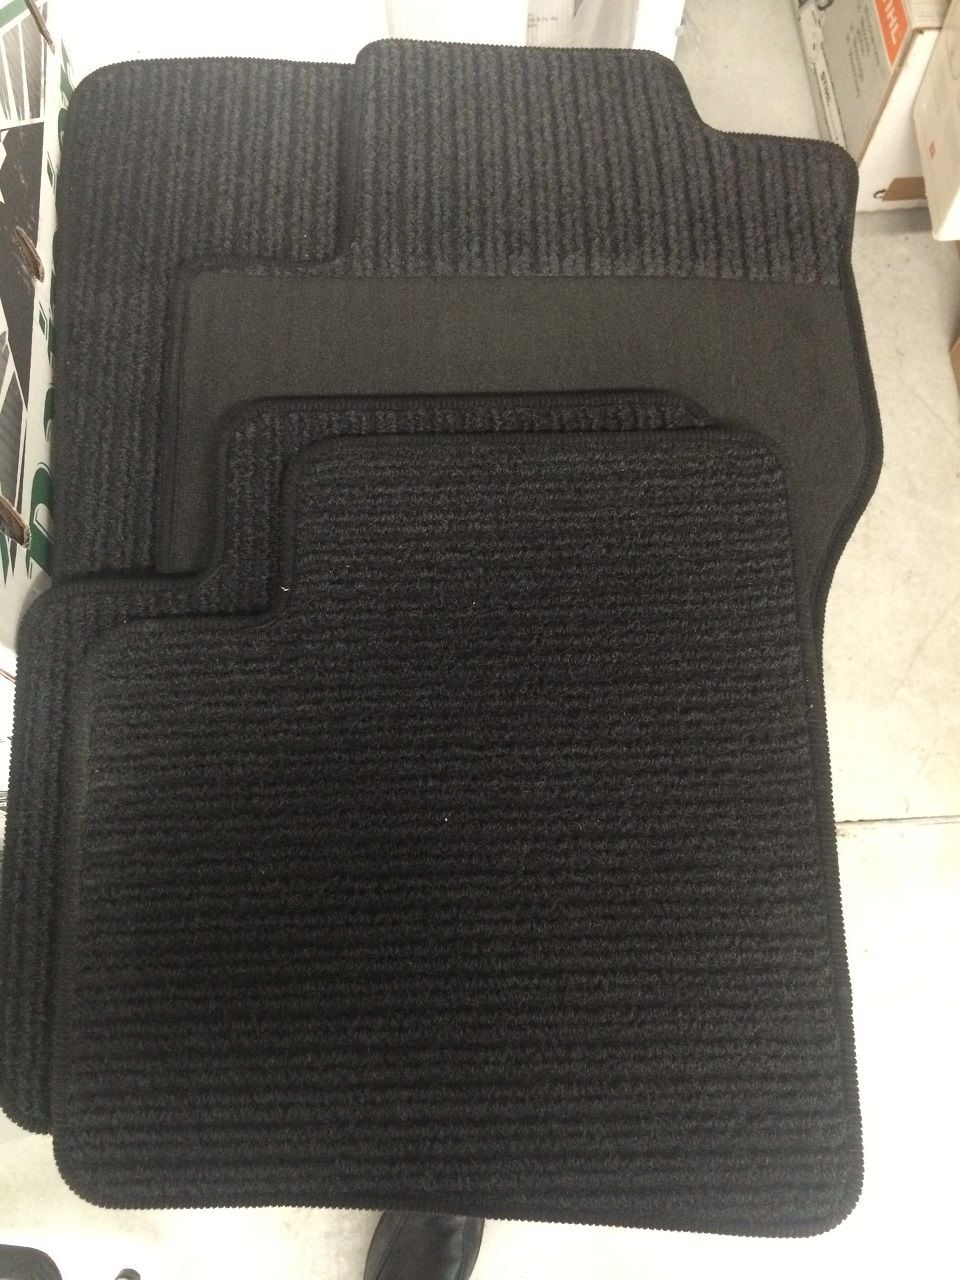 Interior/Upholstery - FS_Genuine GL450 Carpet Floor Mats, Brand New $50 - New - 2007 to 2012 Mercedes-Benz GL450 - Austin, TX 78701, United States